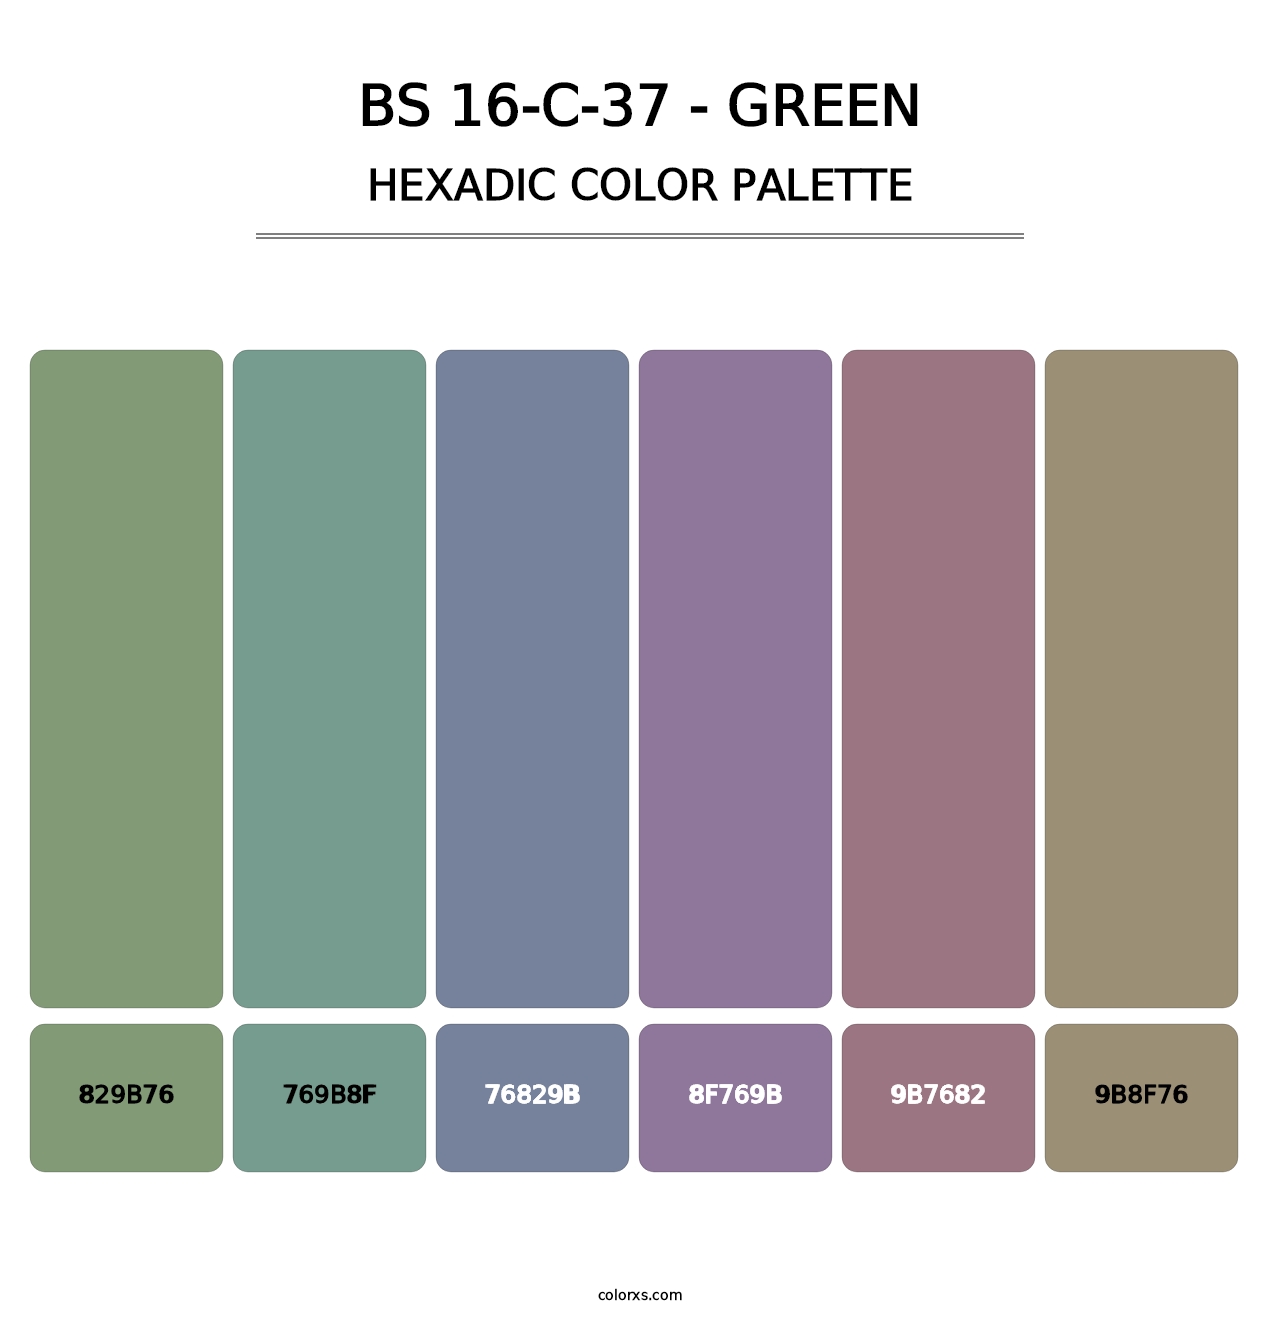 BS 16-C-37 - Green - Hexadic Color Palette